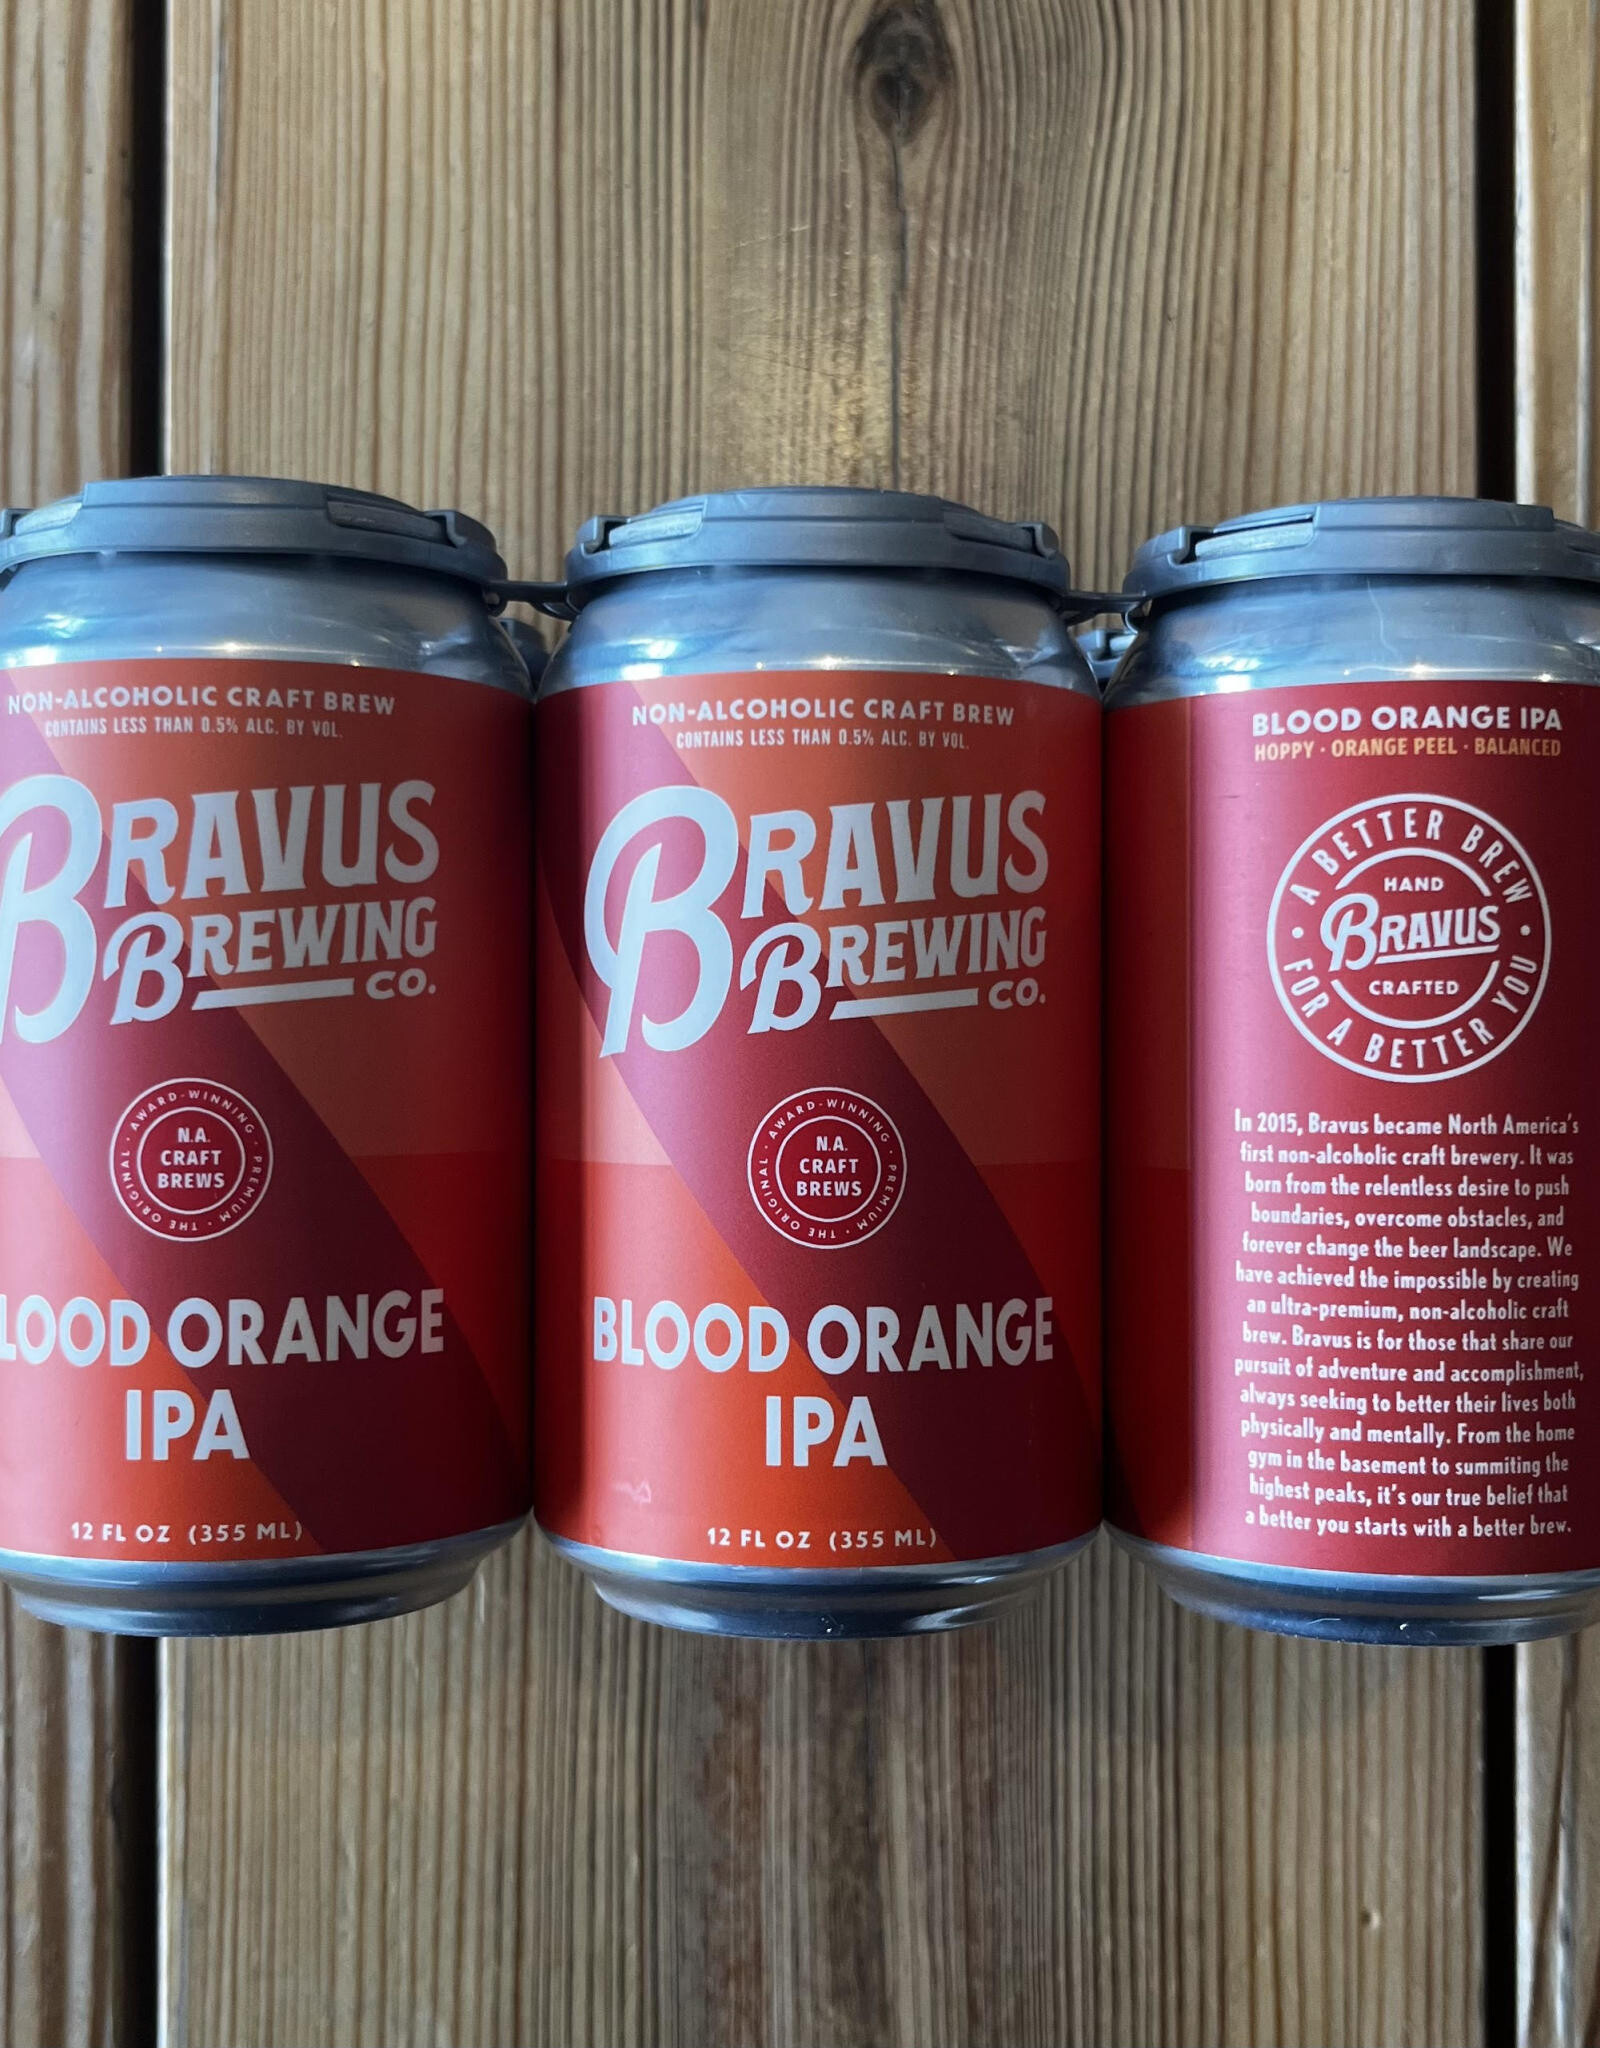 6 PACK Bravus Blood Orange IPA - Non Alcoholic